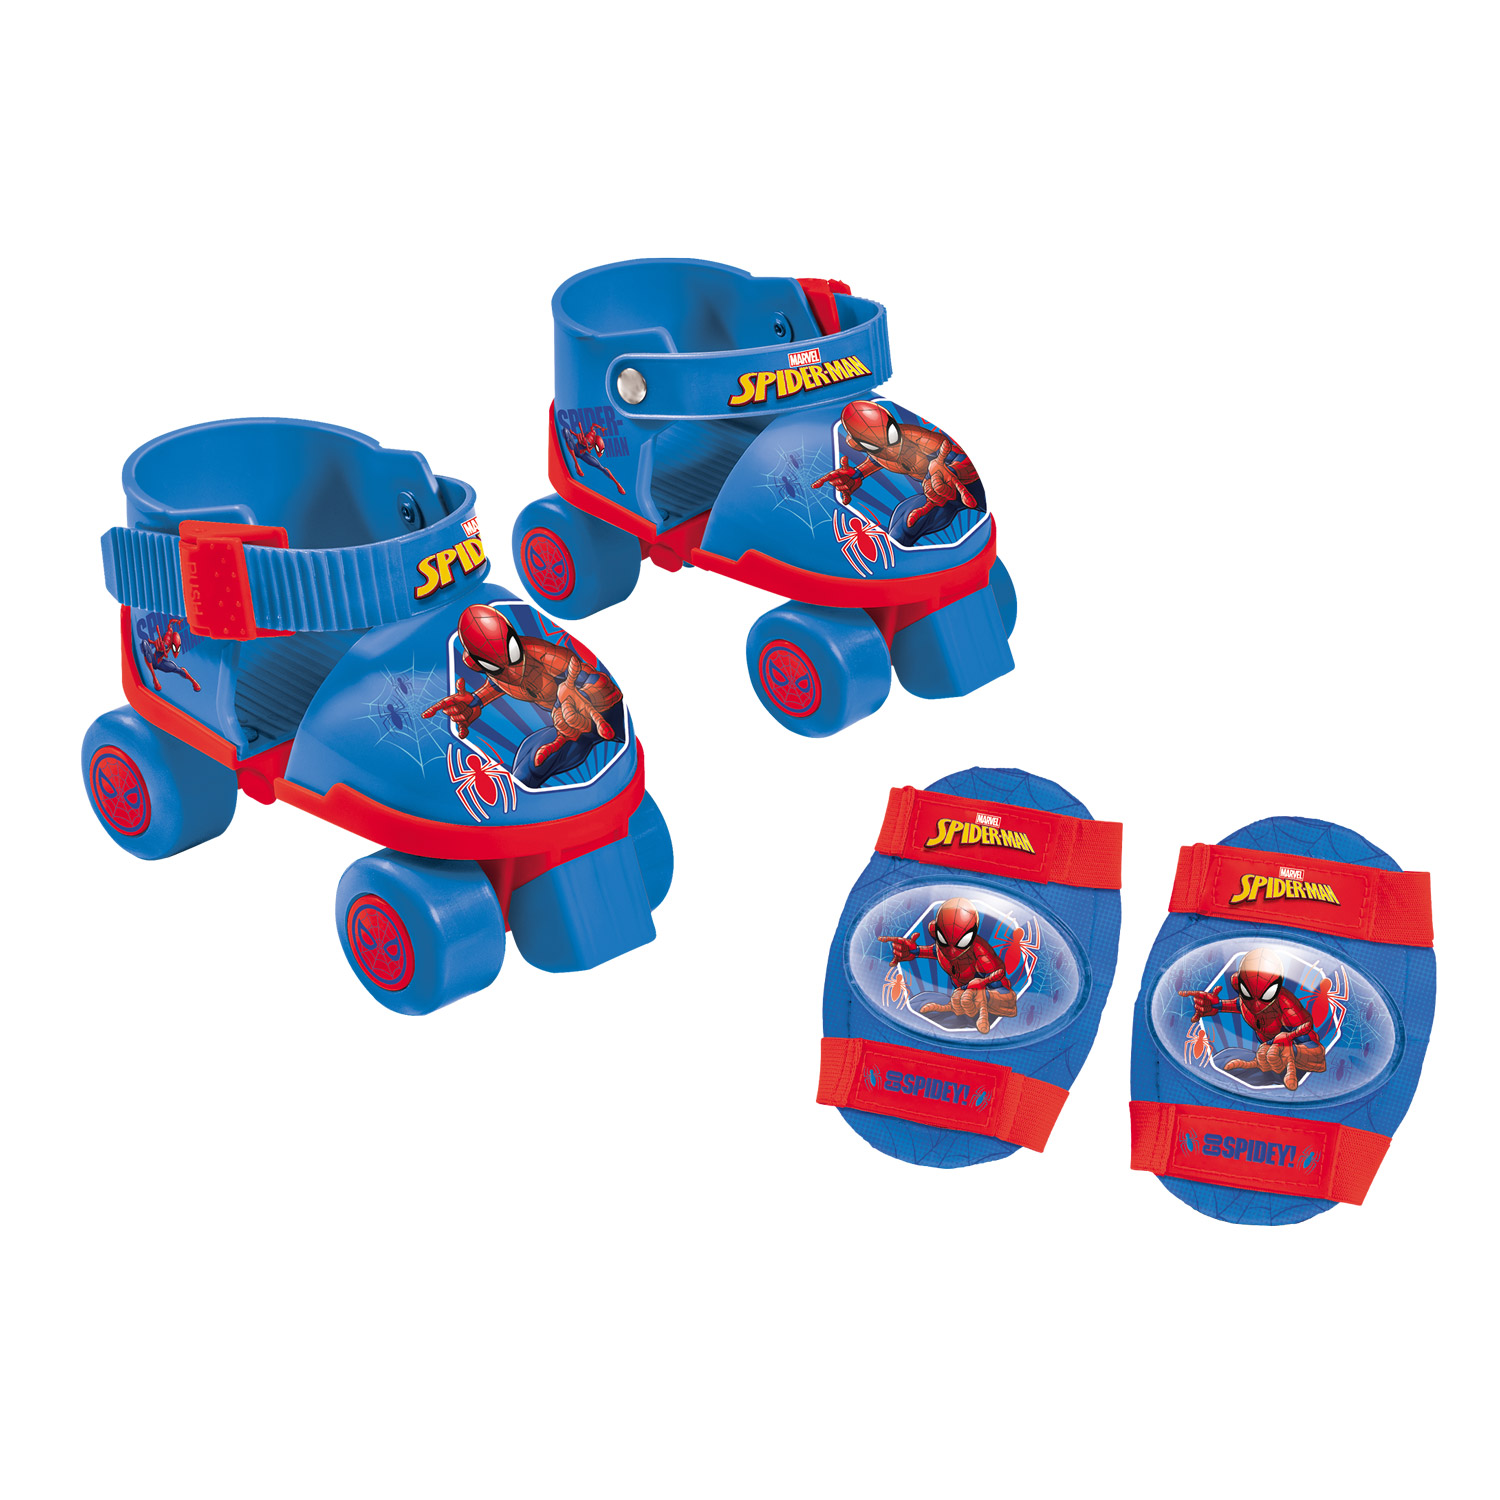 Toymagic - 🕸️ The Spider-Man roller skate set is